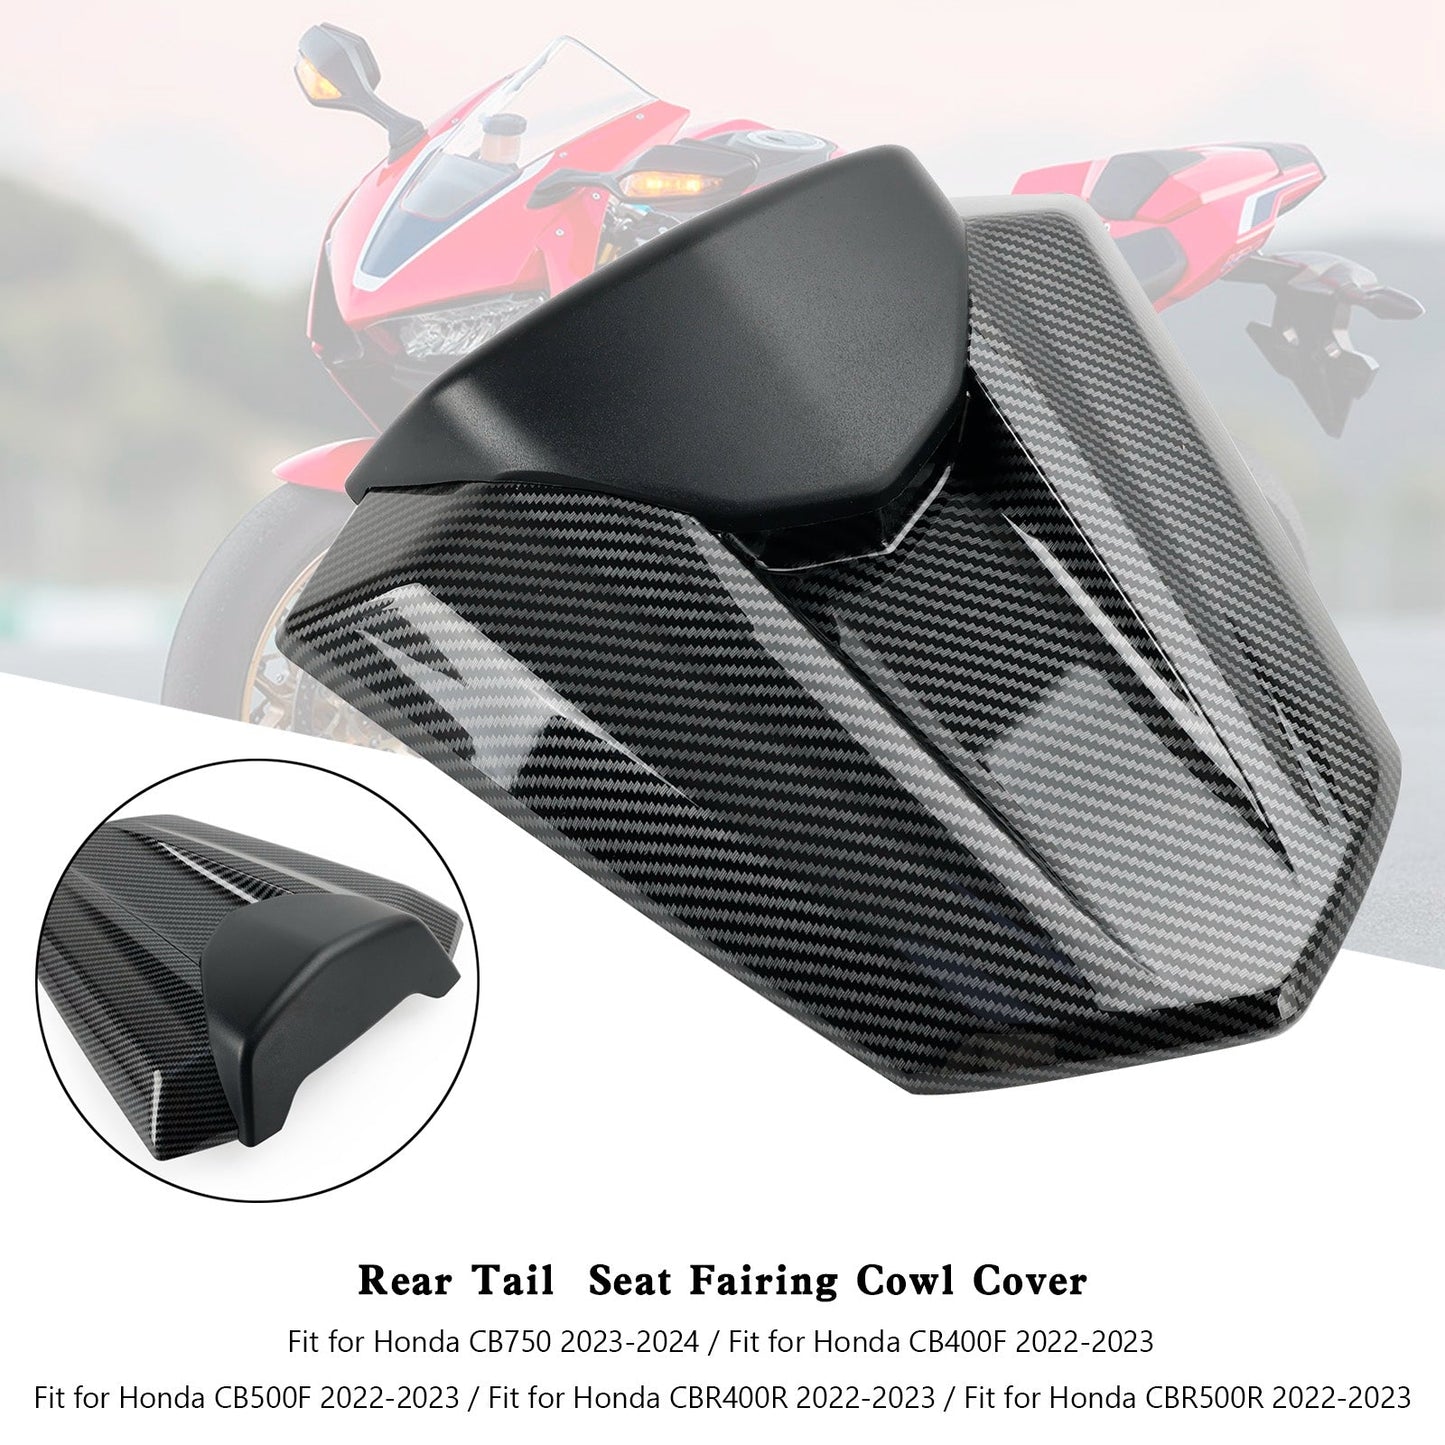 2023-2024 Honda CB750 Rear Tail Seat Fairing Cover